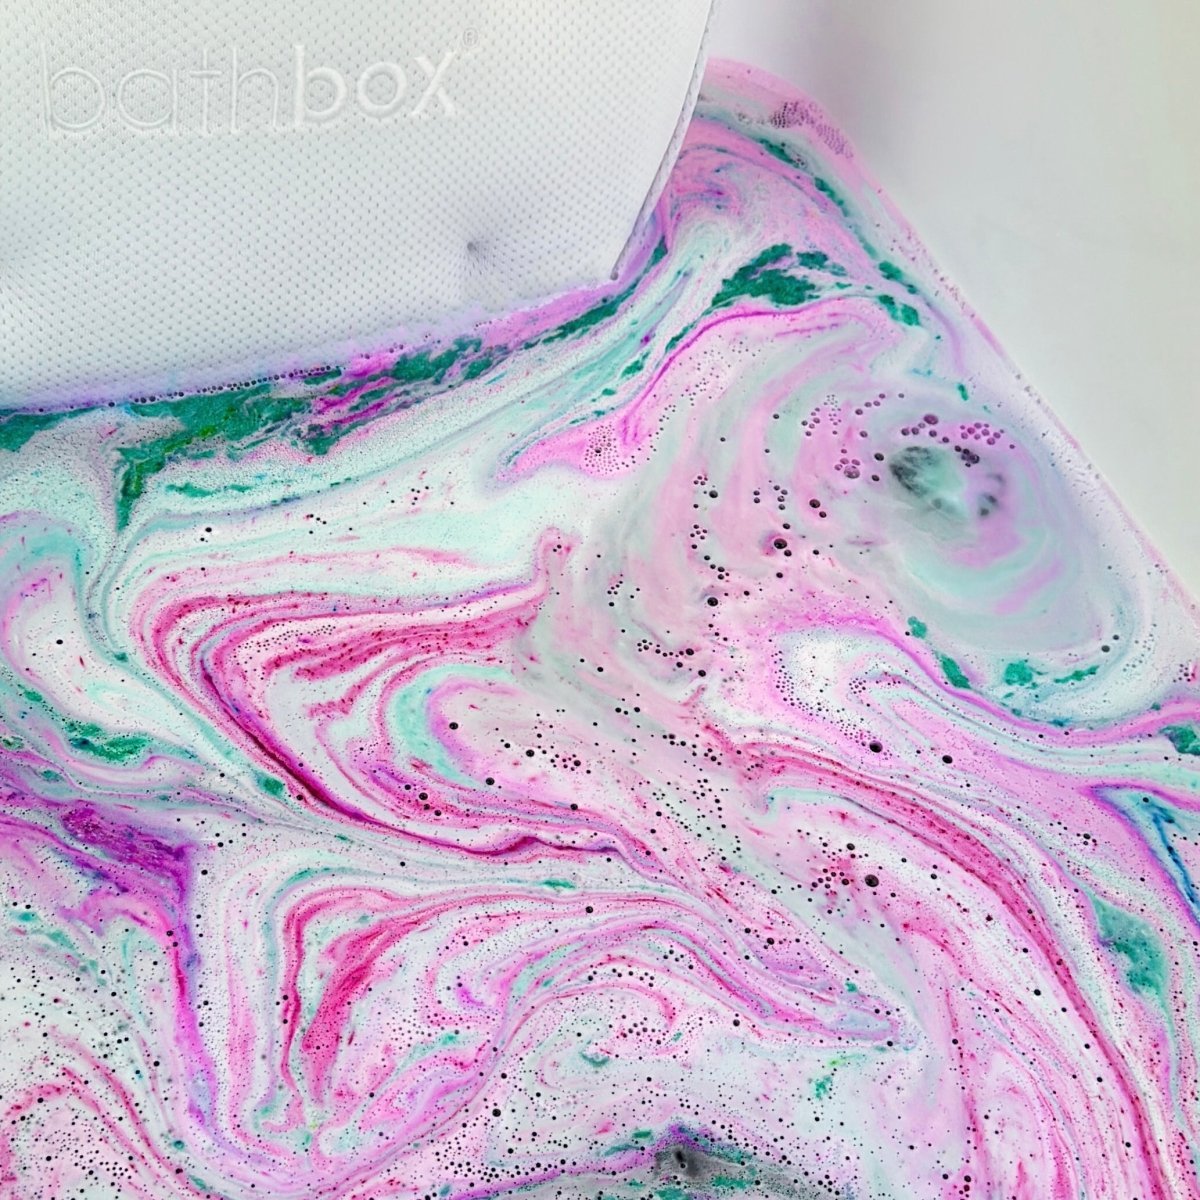 Namaste Bath Bomb for Kids & Adults - Large Colourful Glitters & Sandalwood Fragrance - Made in Australia by Bath Box